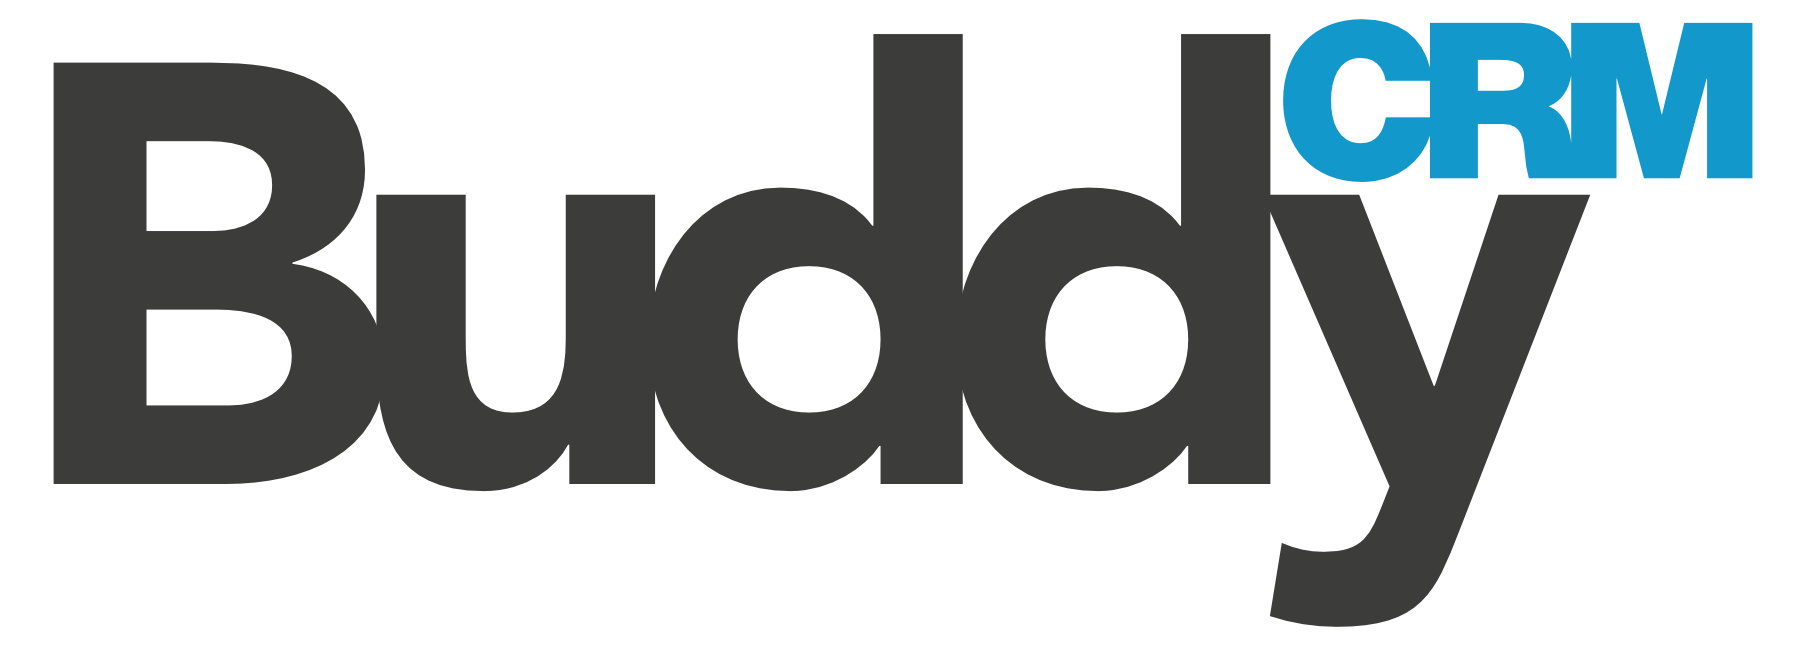 BuddyCRM logo - no man